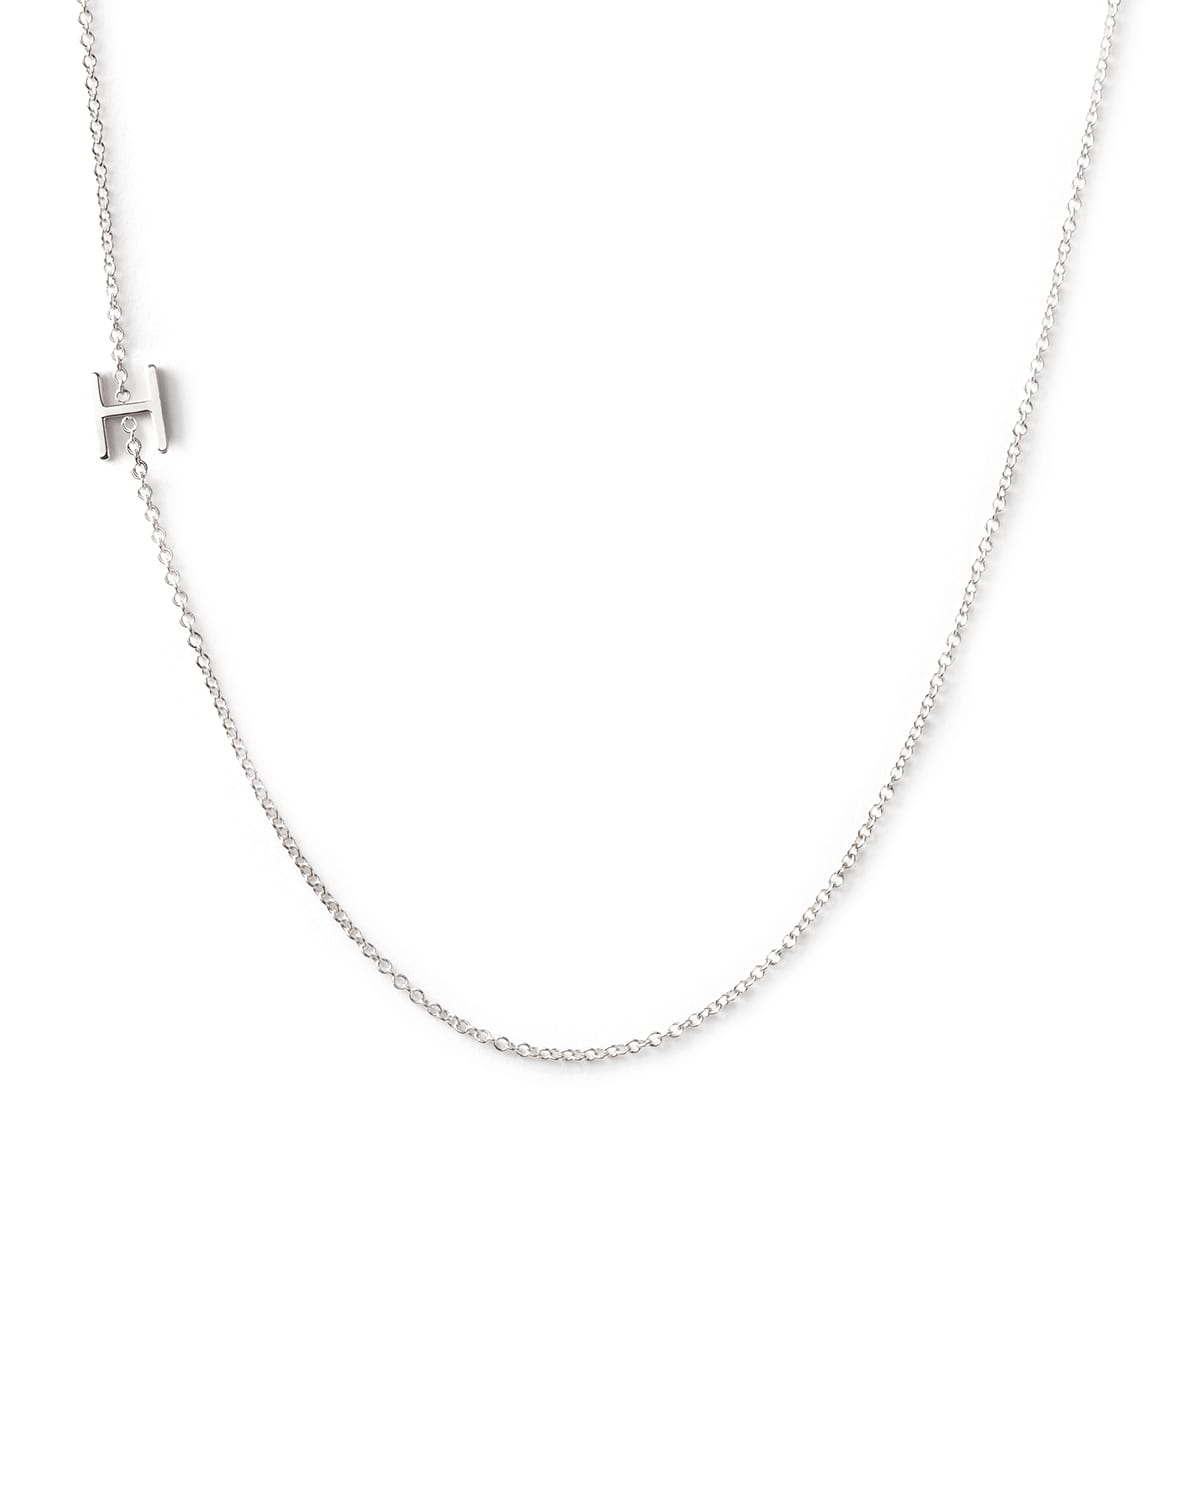 Maya Brenner Designs 14k White Gold Mini Letter Necklace In H